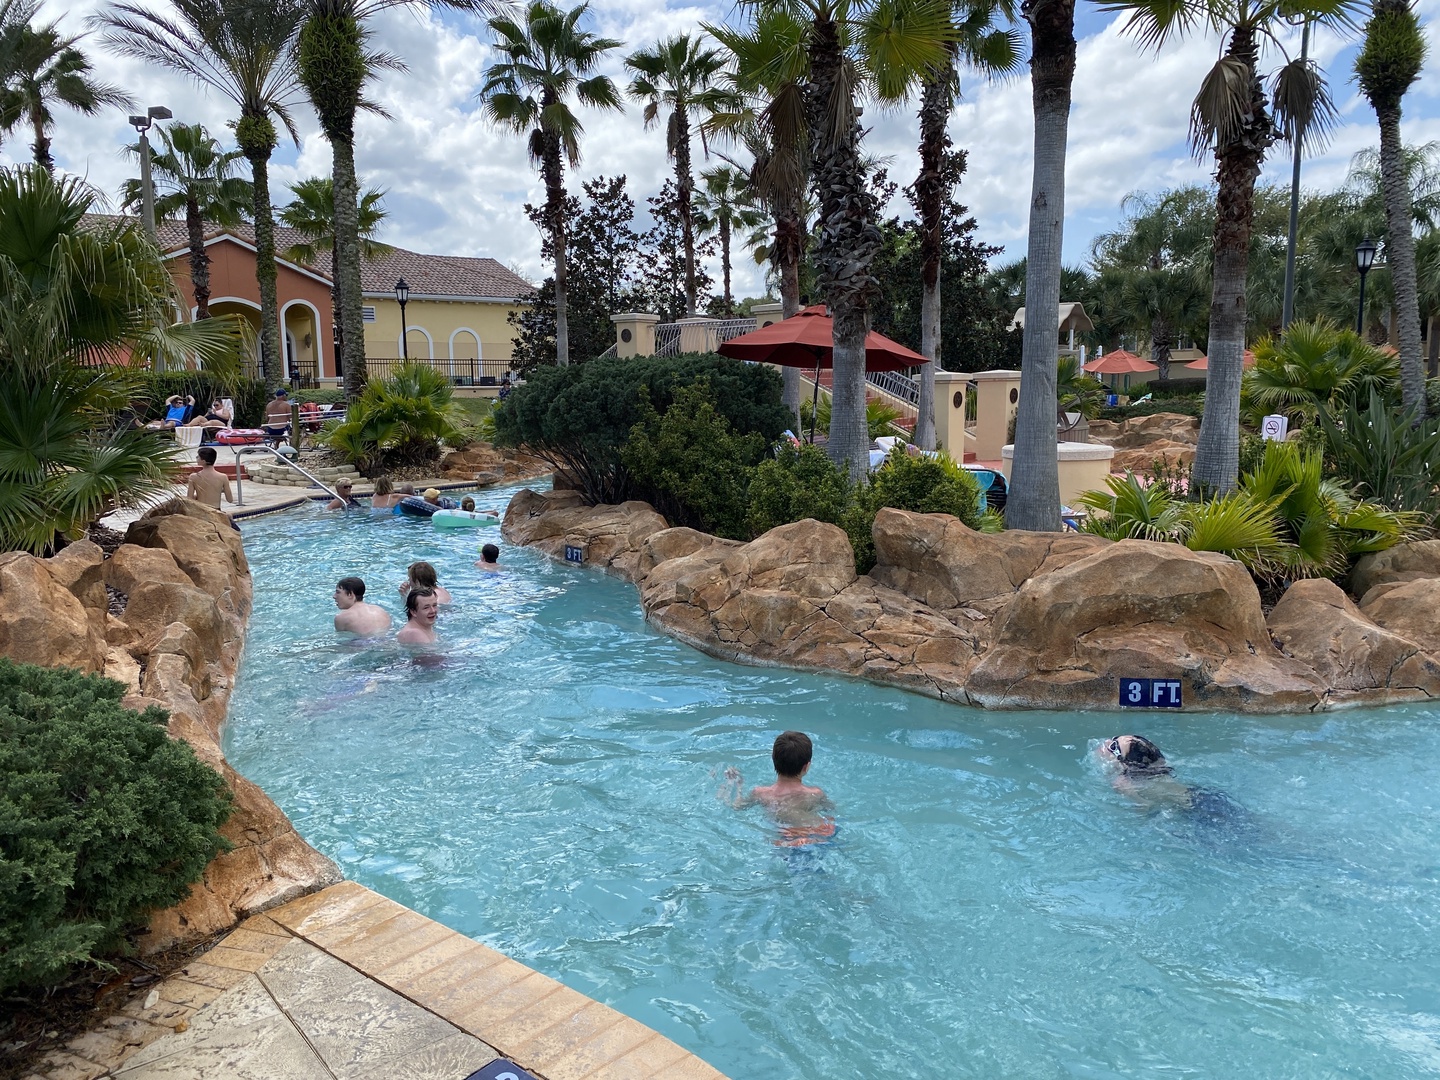 Regal Palms Resort pool